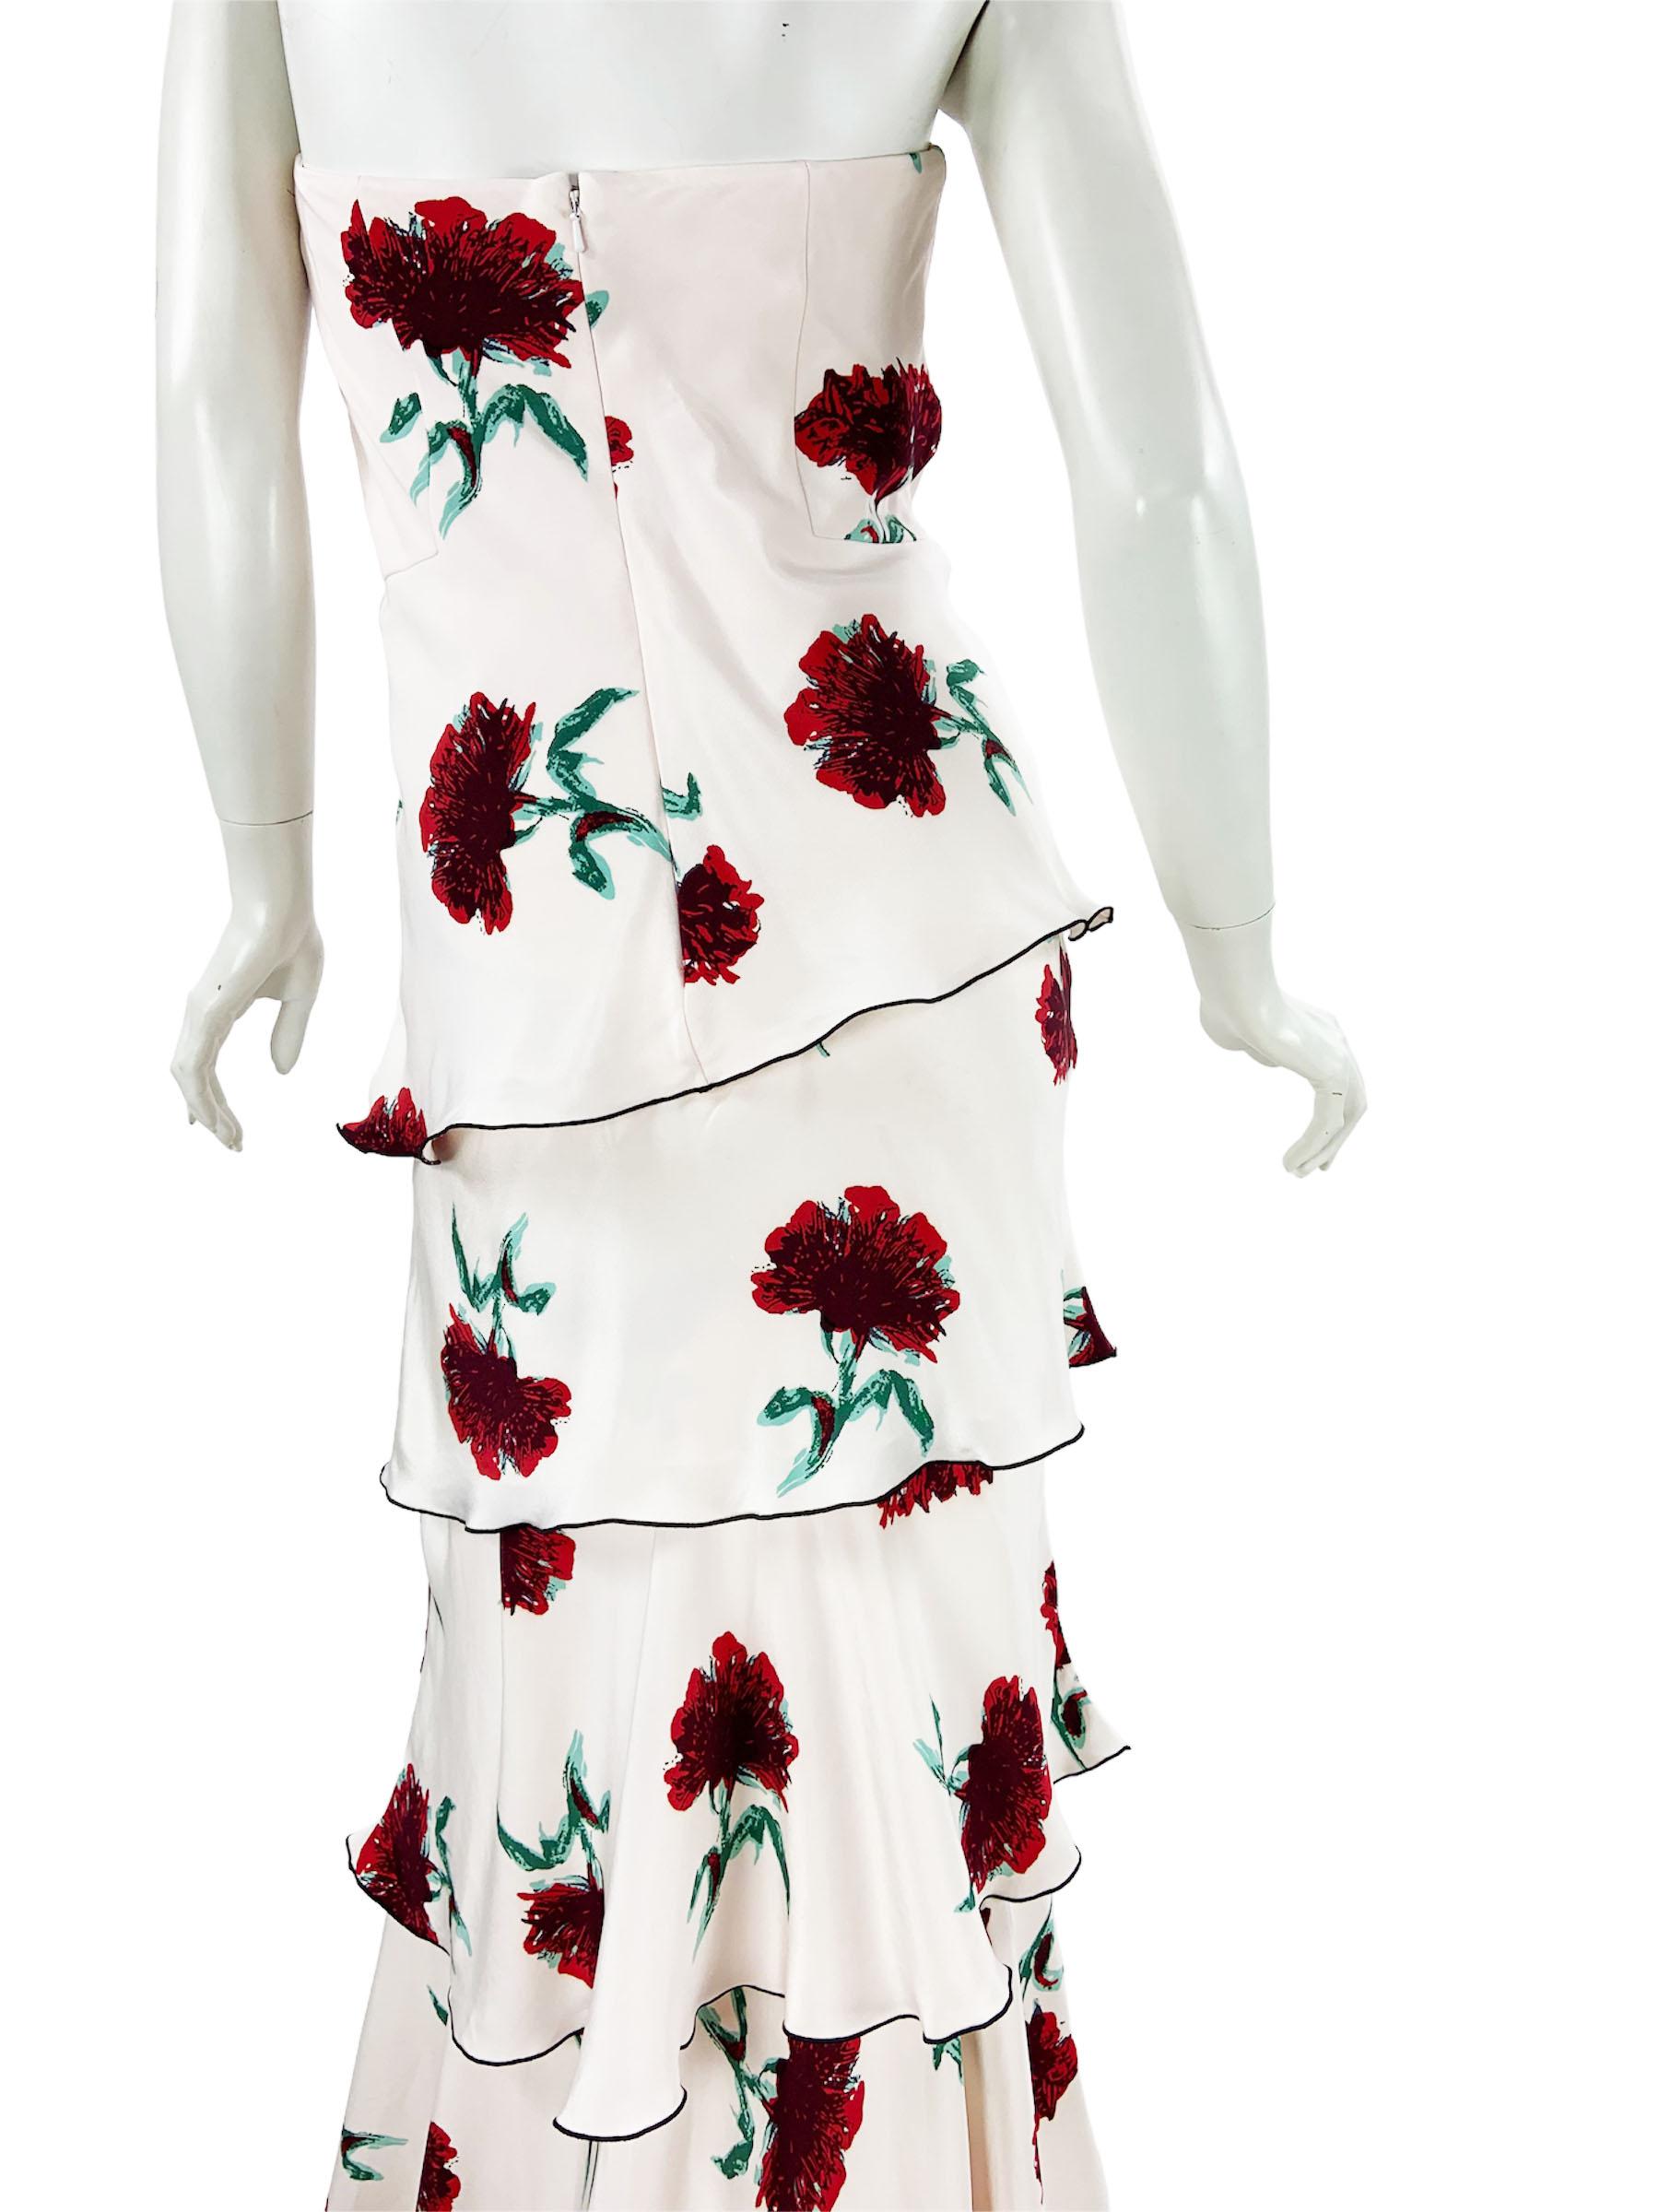 Oscar de la Renta Runway Silk White Floral Print Layered Corset Dress Gown US 6 For Sale 5